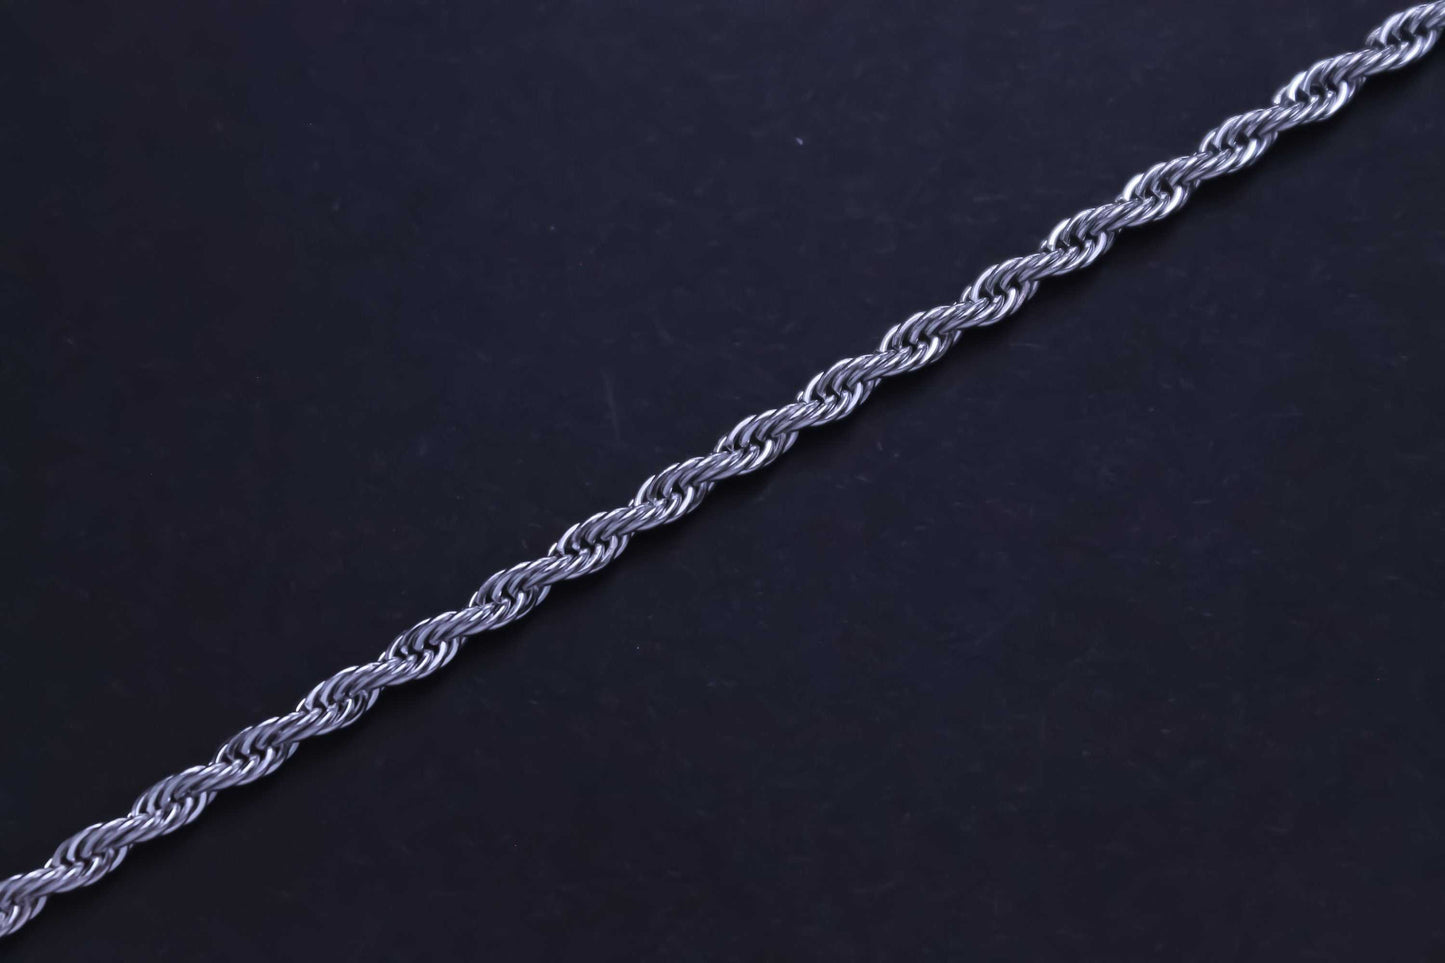 CAPRICORN ZODIAC NECKLACE - Stylish Silver Necklace - Necklace for Women - Necklace for Men - Necklace with Pendant